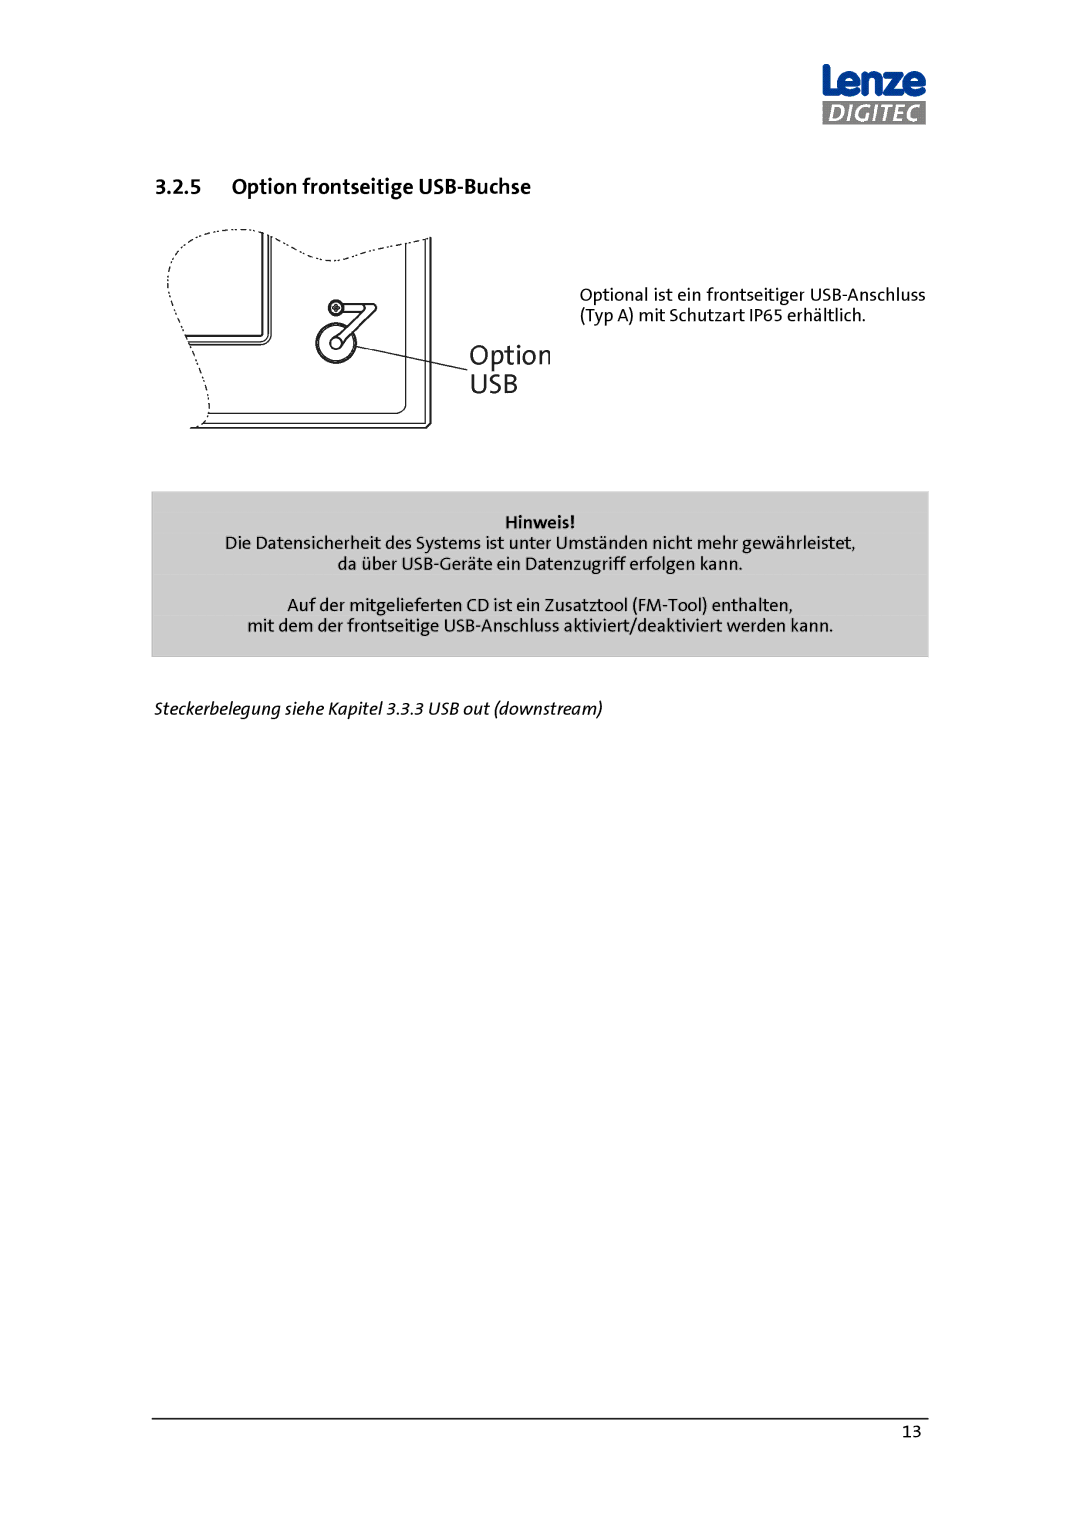 DigiTech MP 600-9000 DVI manual Option frontseitige USB-Buchse, Hinweis 